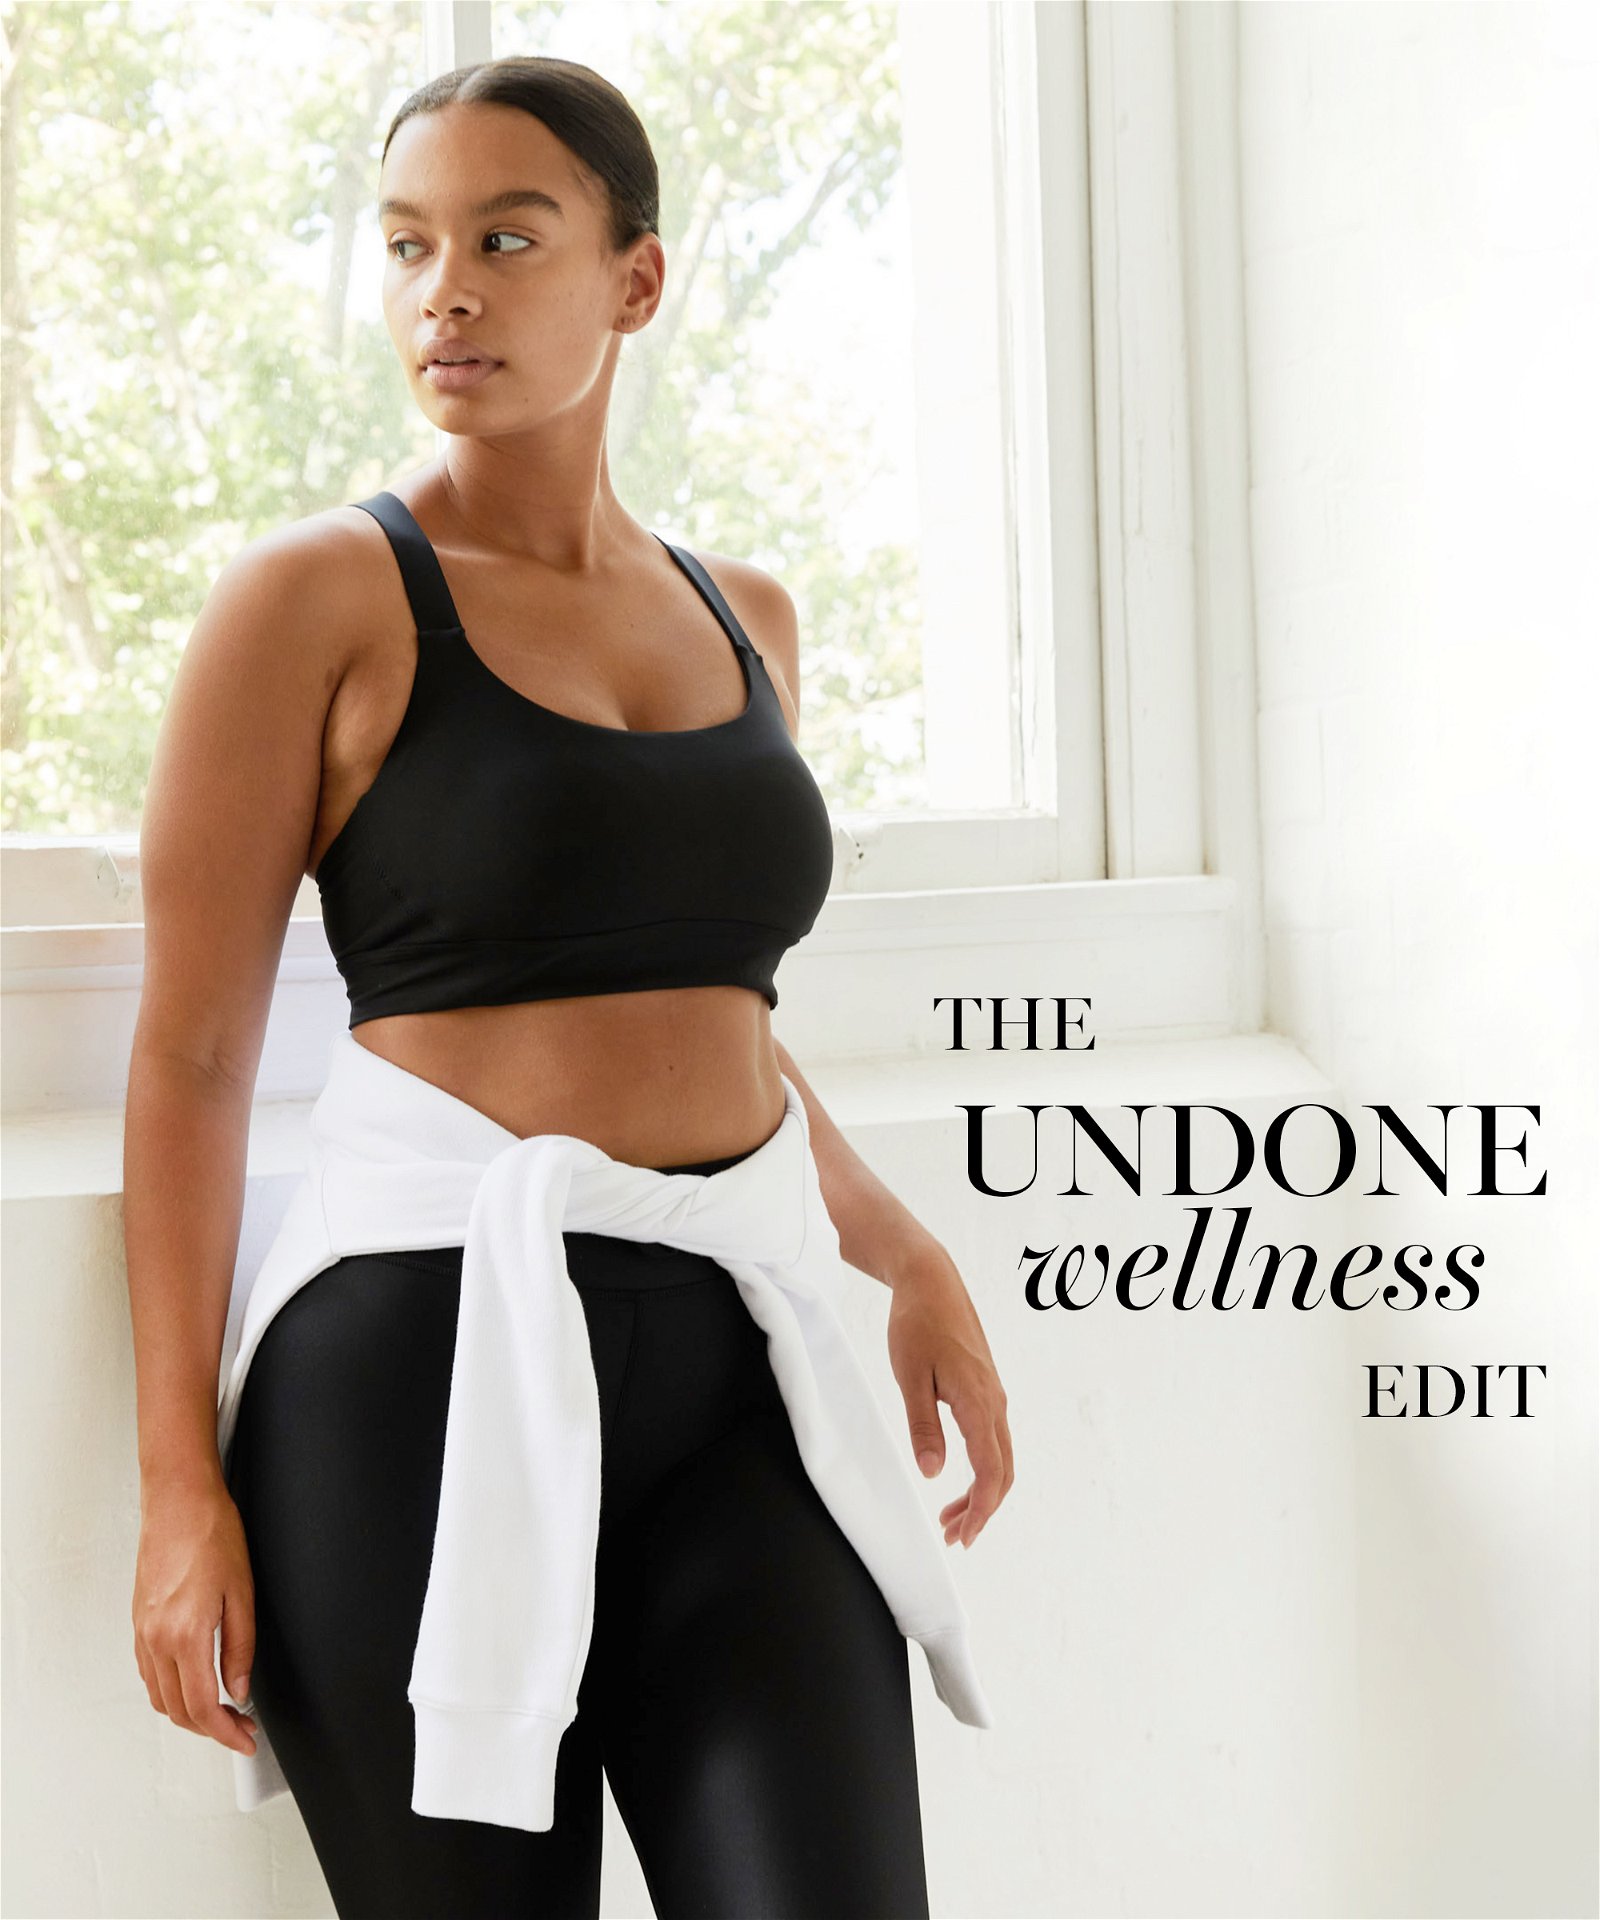 The Undone: The UNDONE Wellness Edit